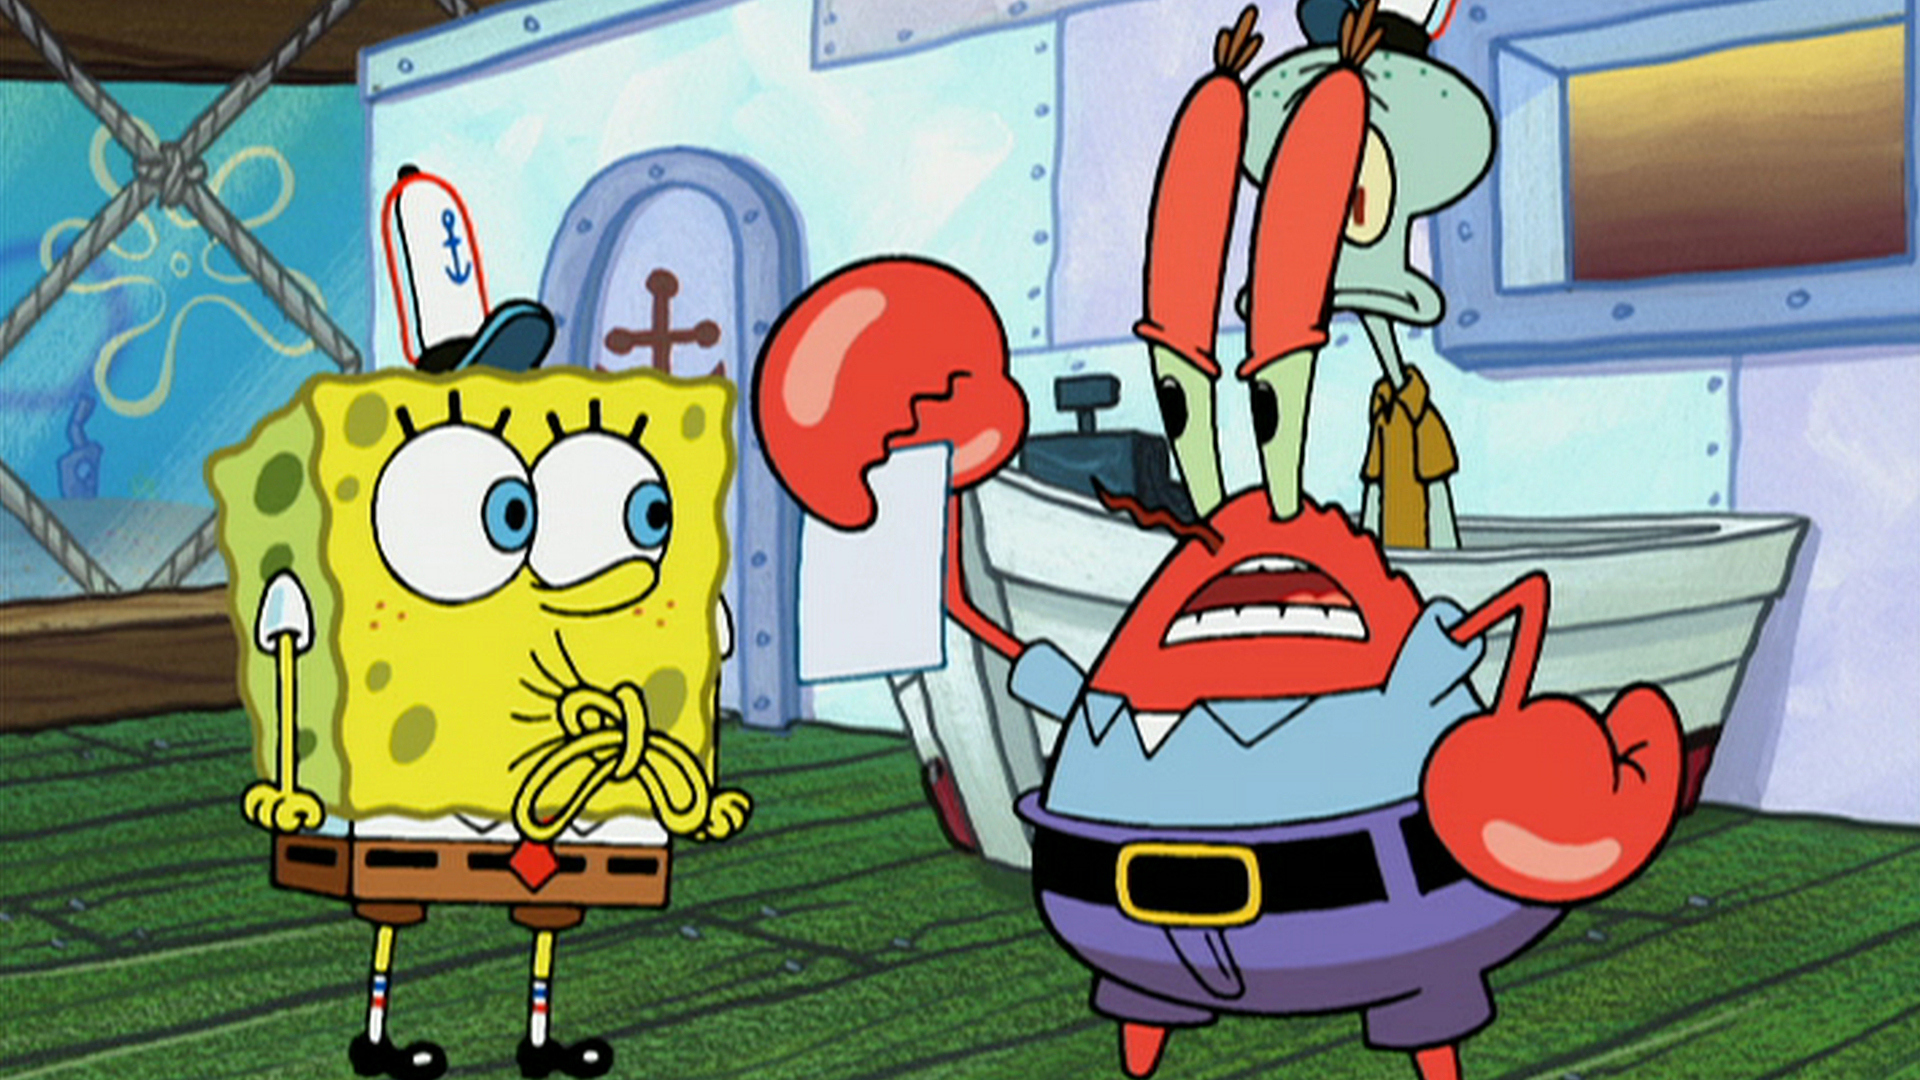 spongebob squarepants episodes online free full